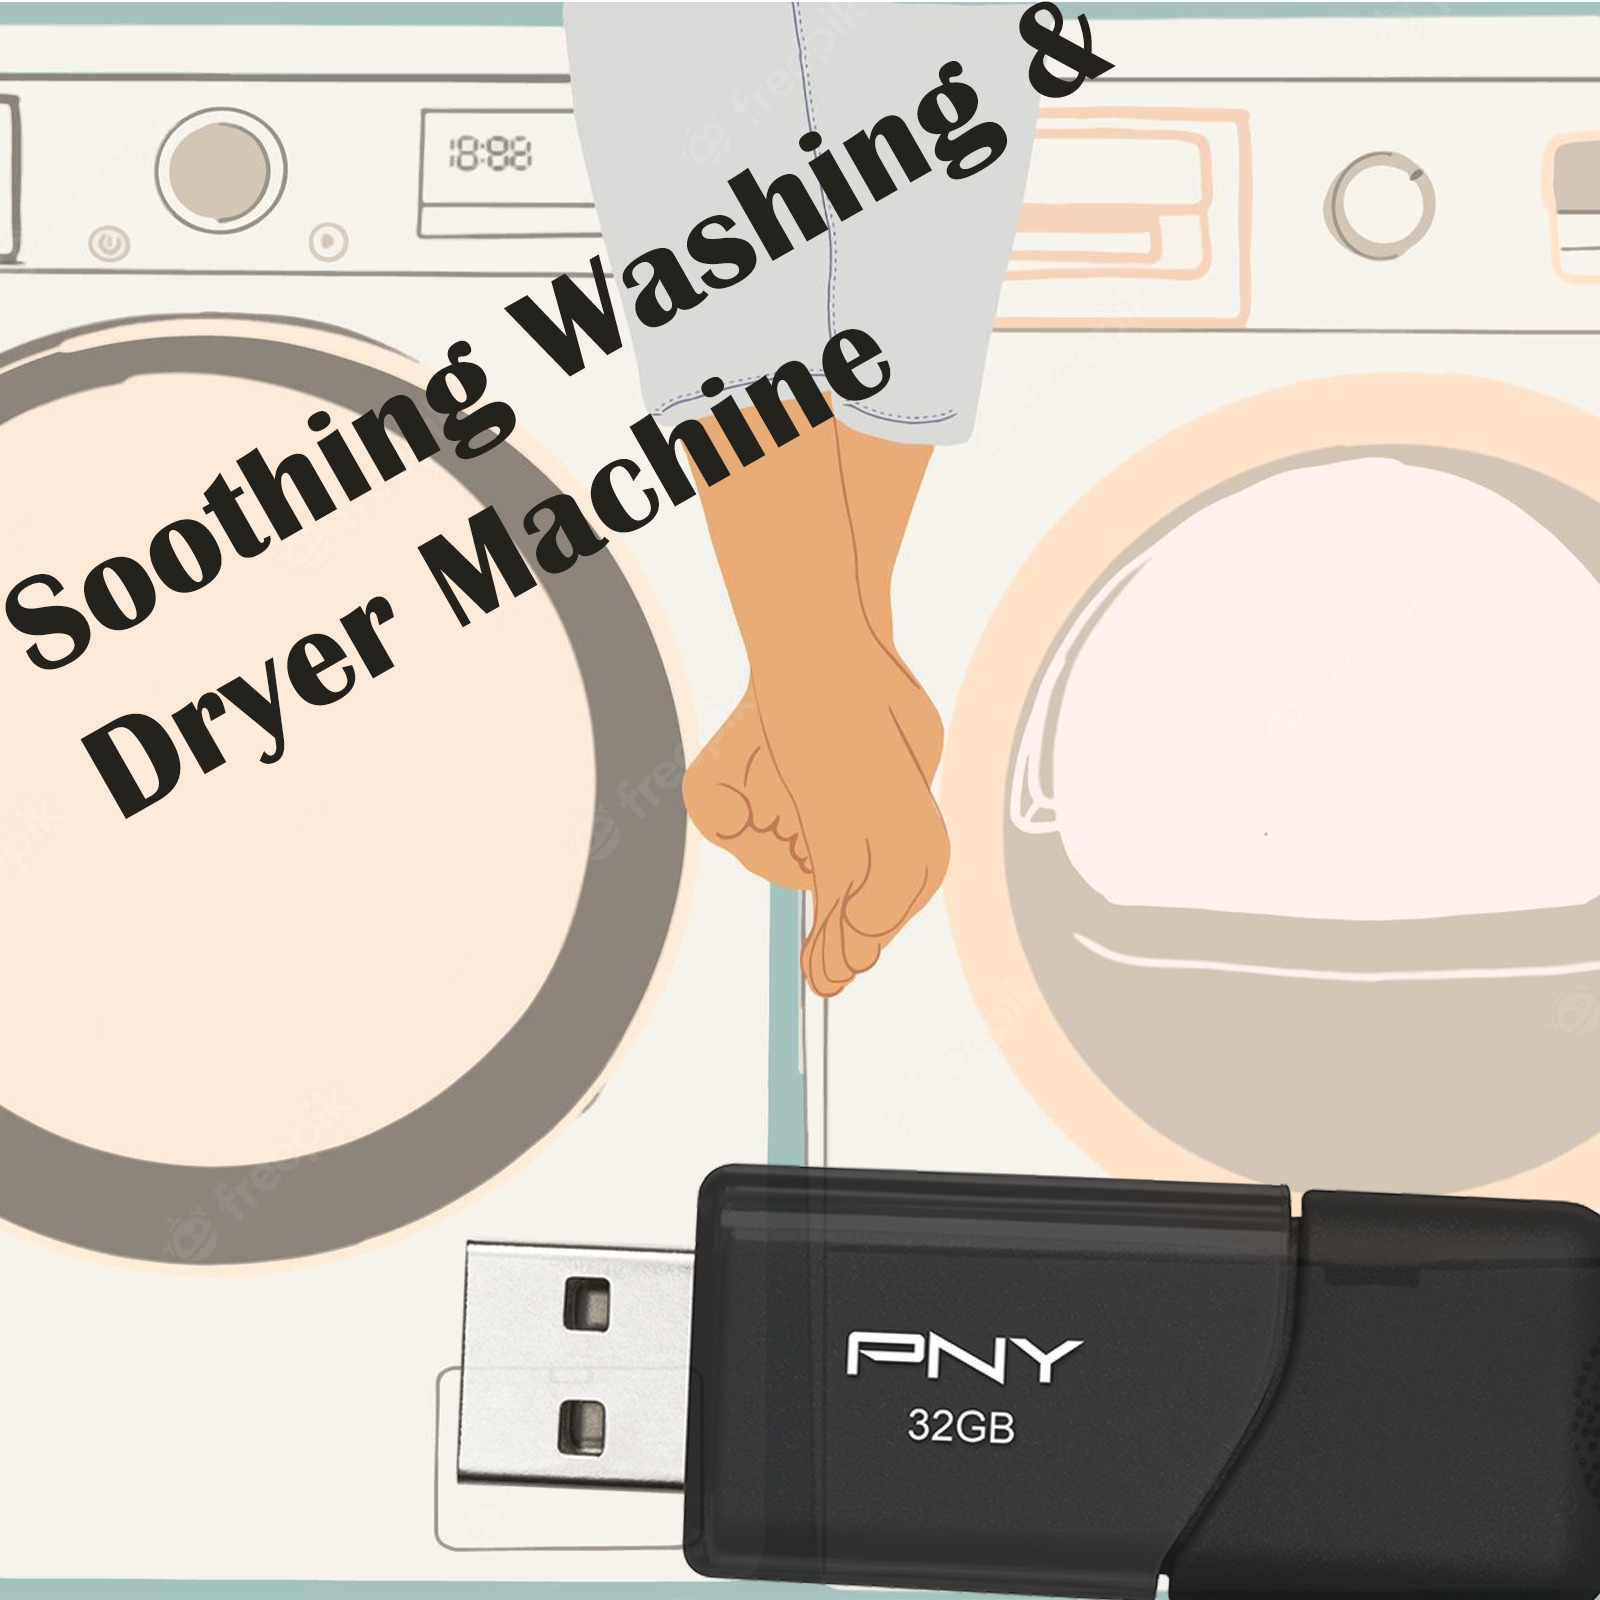 Soothing Washing & Dryer Machines (Relaxation & Sleep Aid) on 16GB USB